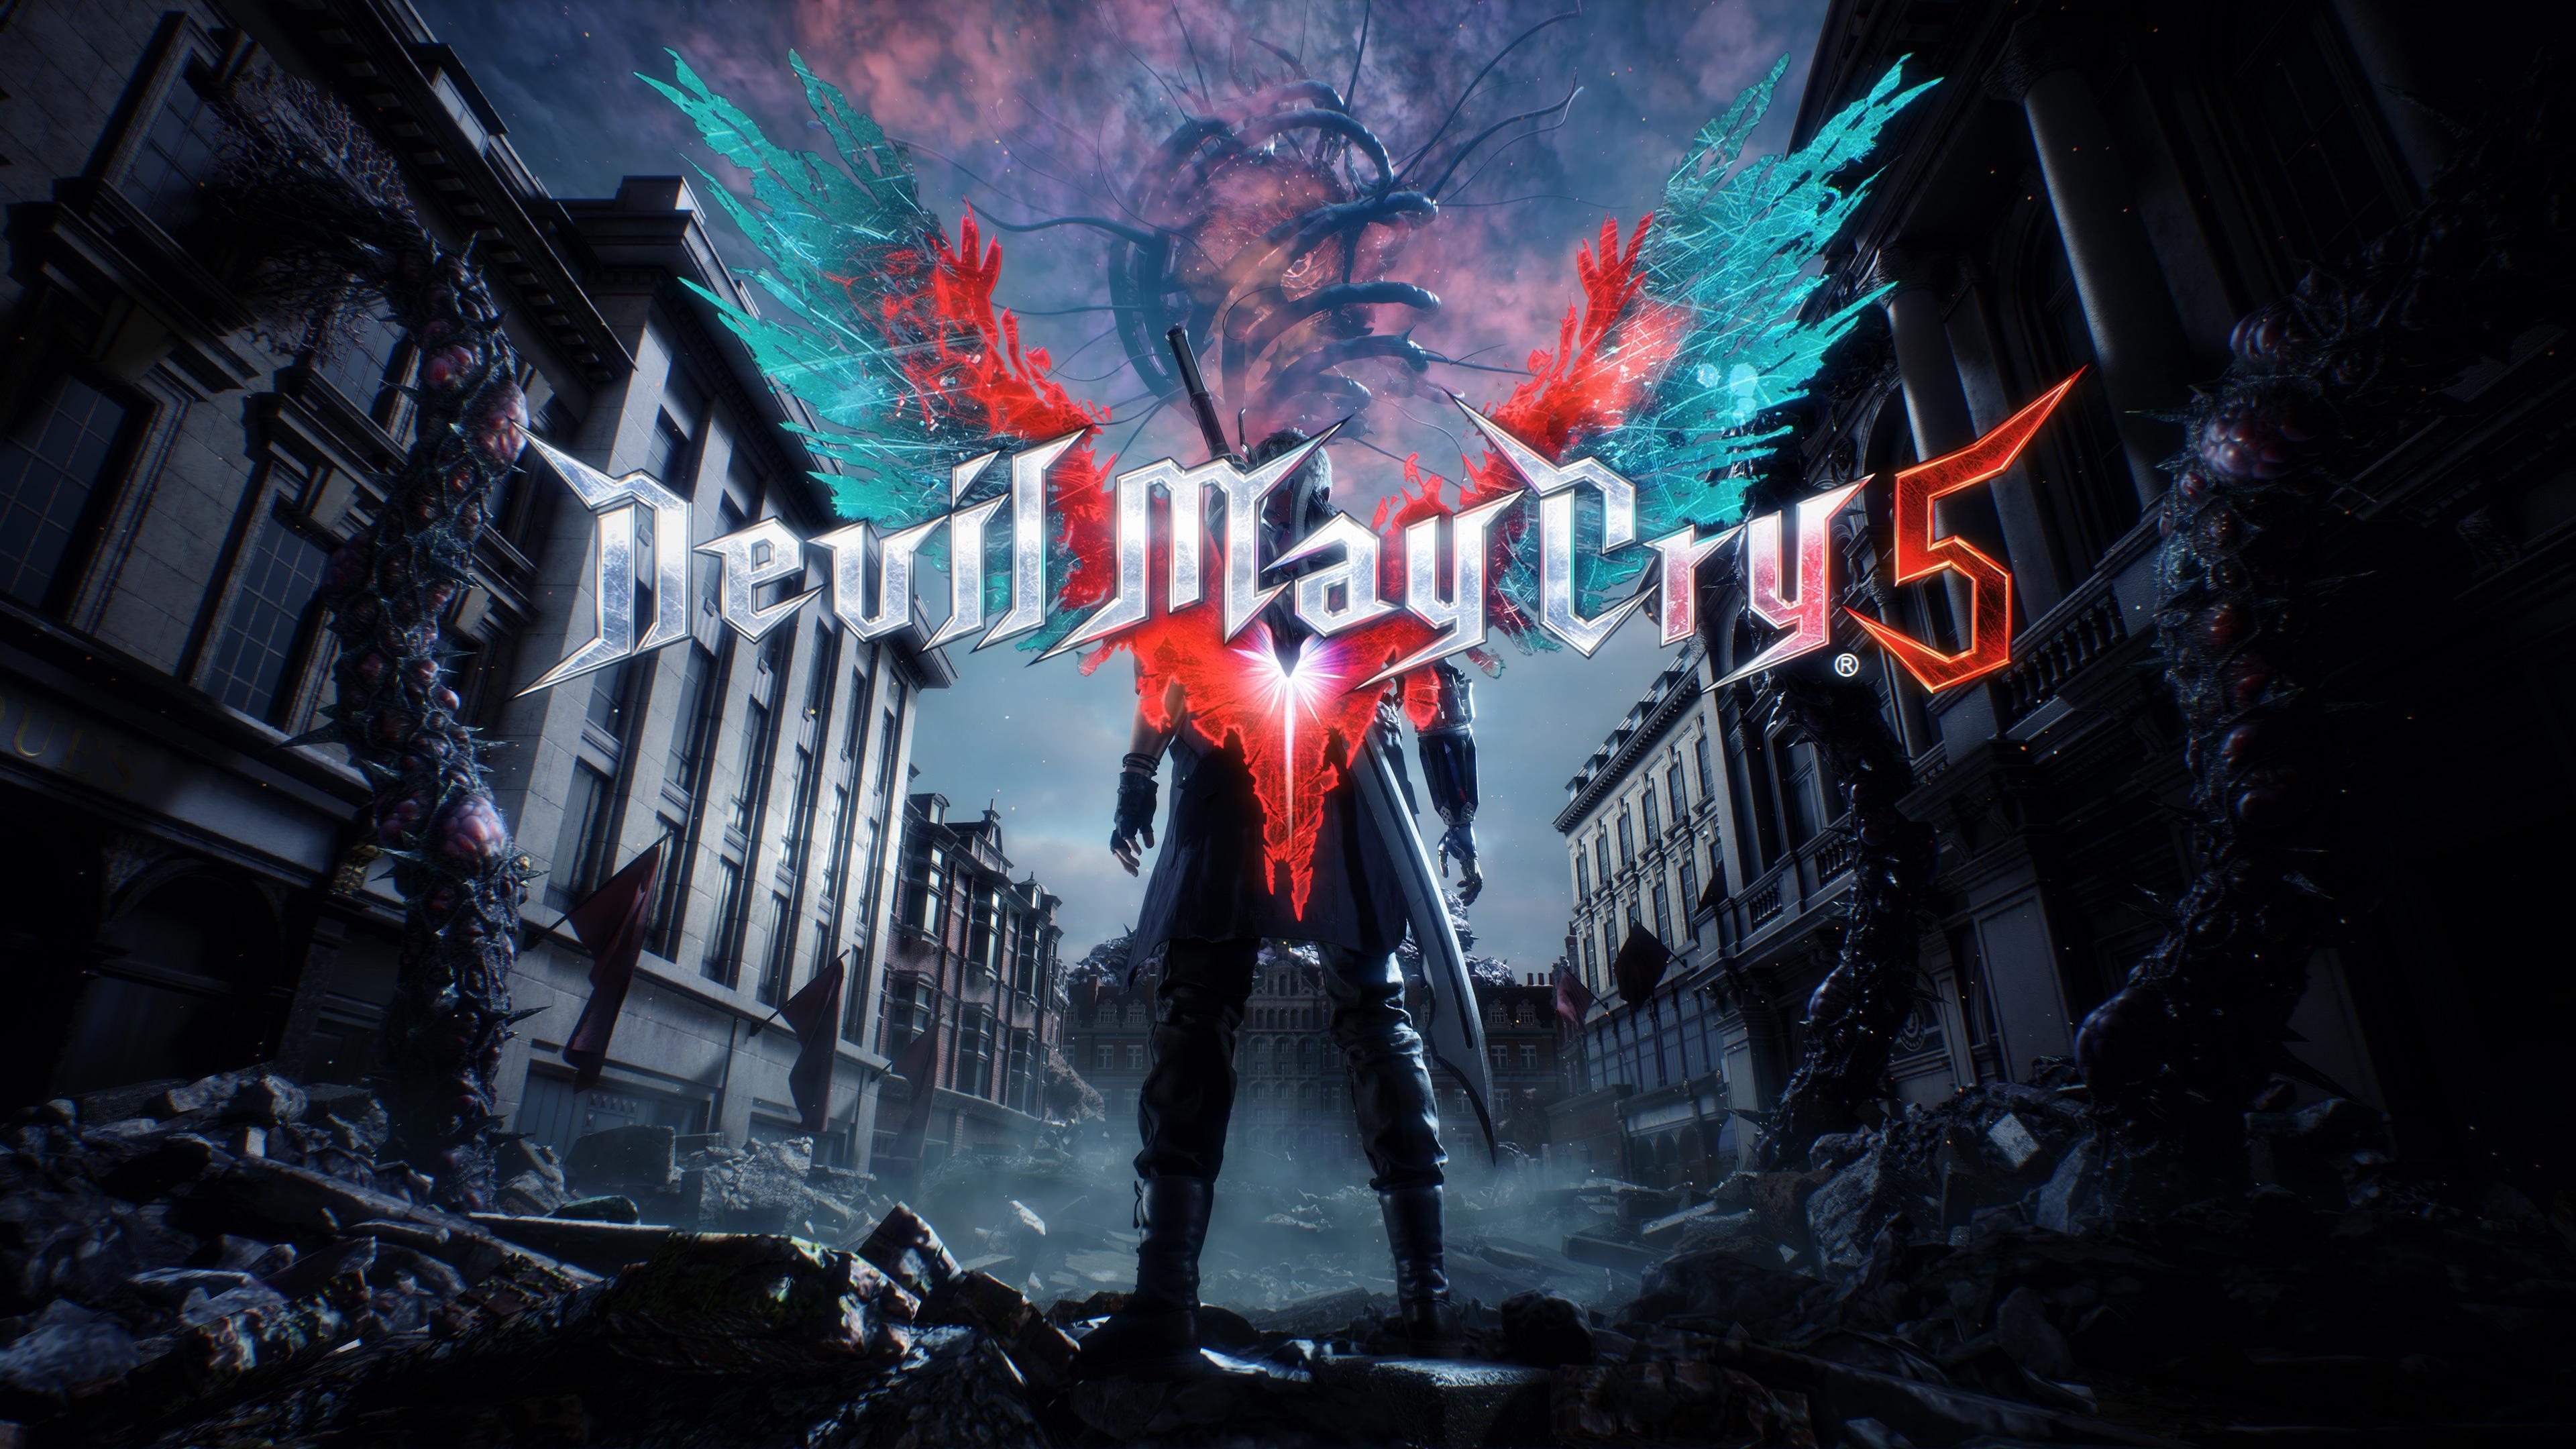 Wallpaper devil, Dante, Devil May Cry 5 for mobile and desktop